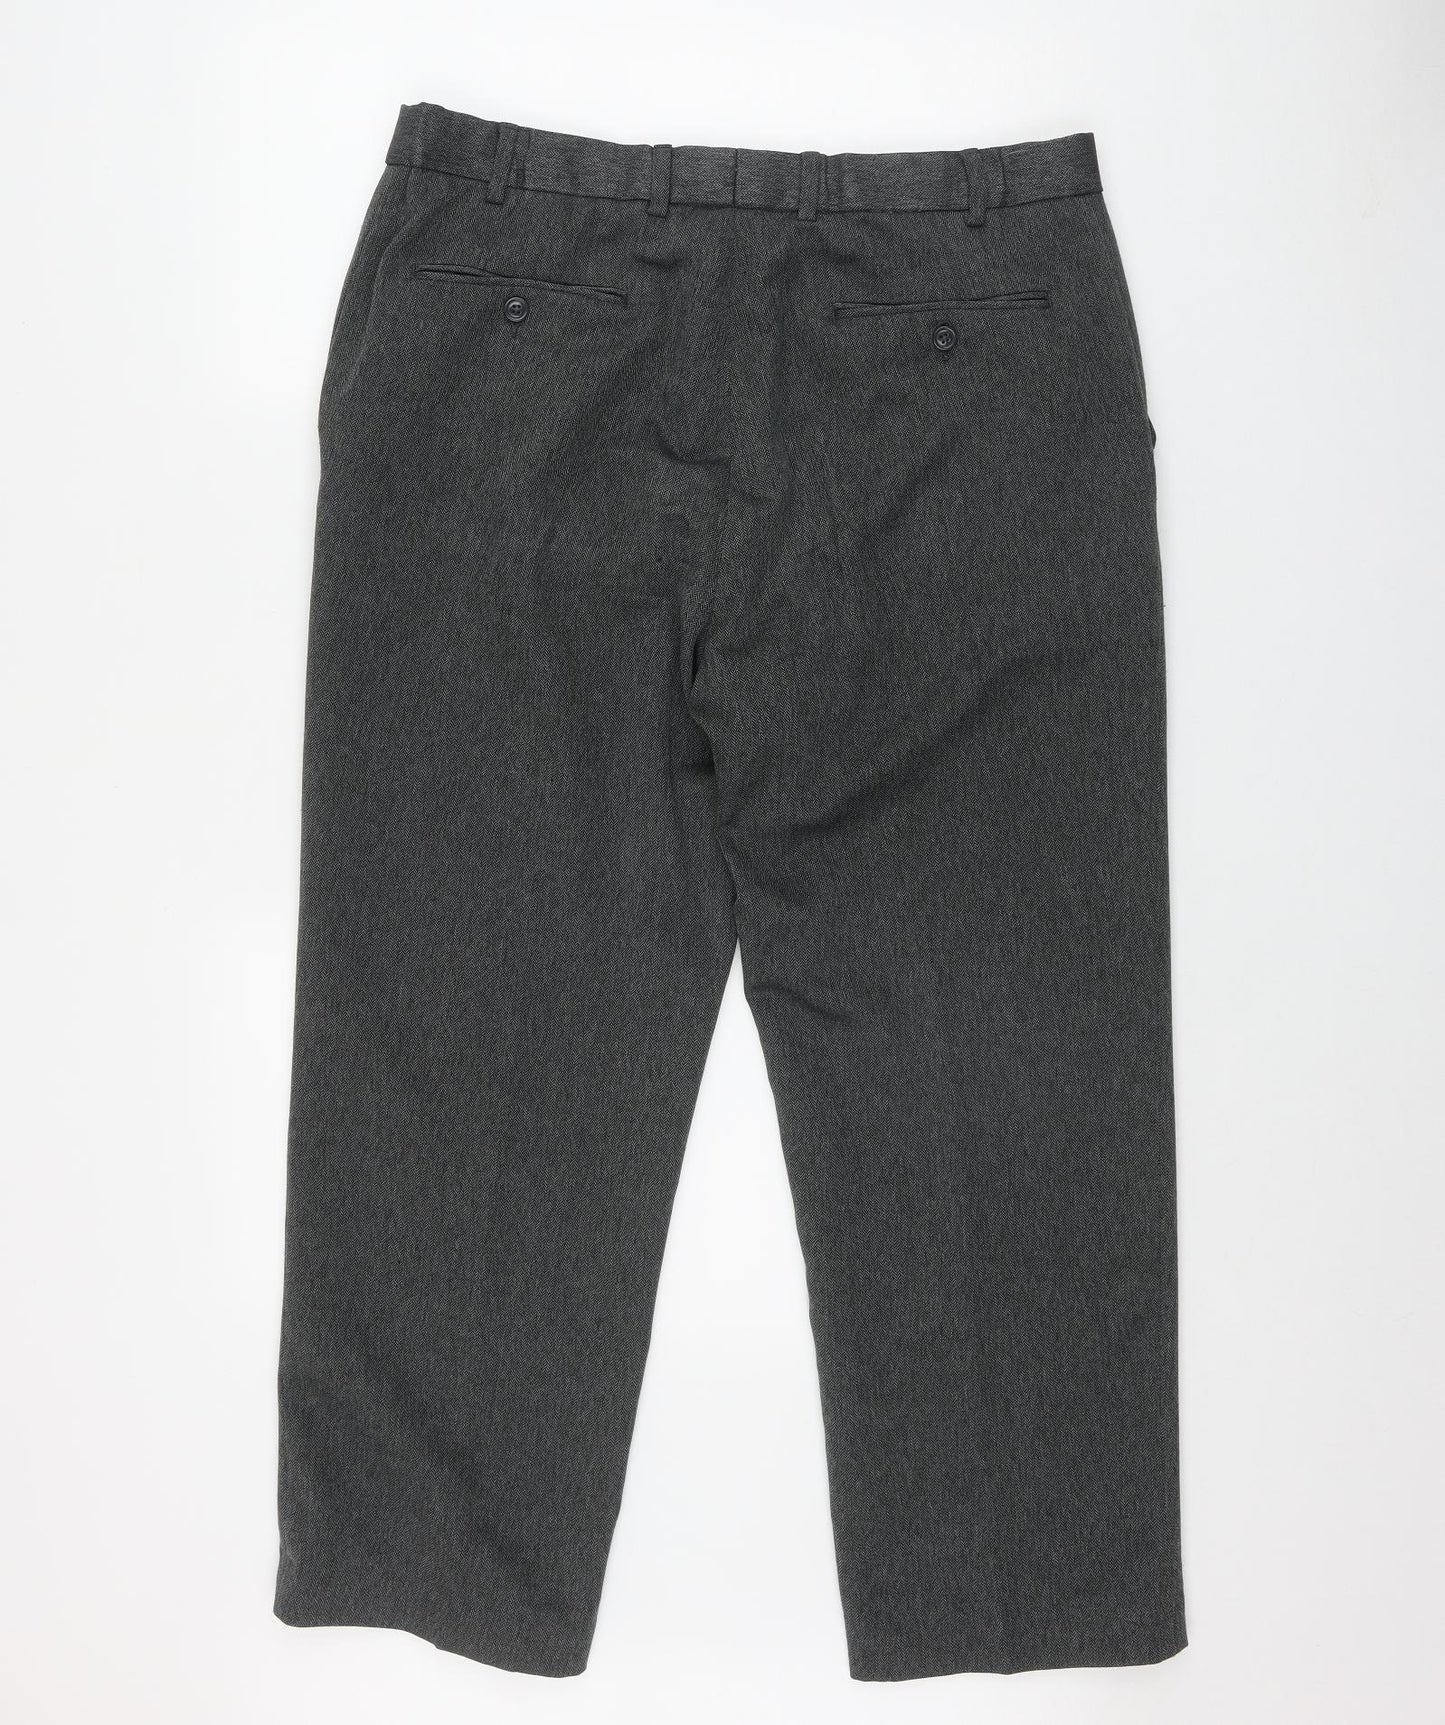 F&F Mens Grey Herringbone Polyester Trousers  Size 36 in L29 in Regular Zip